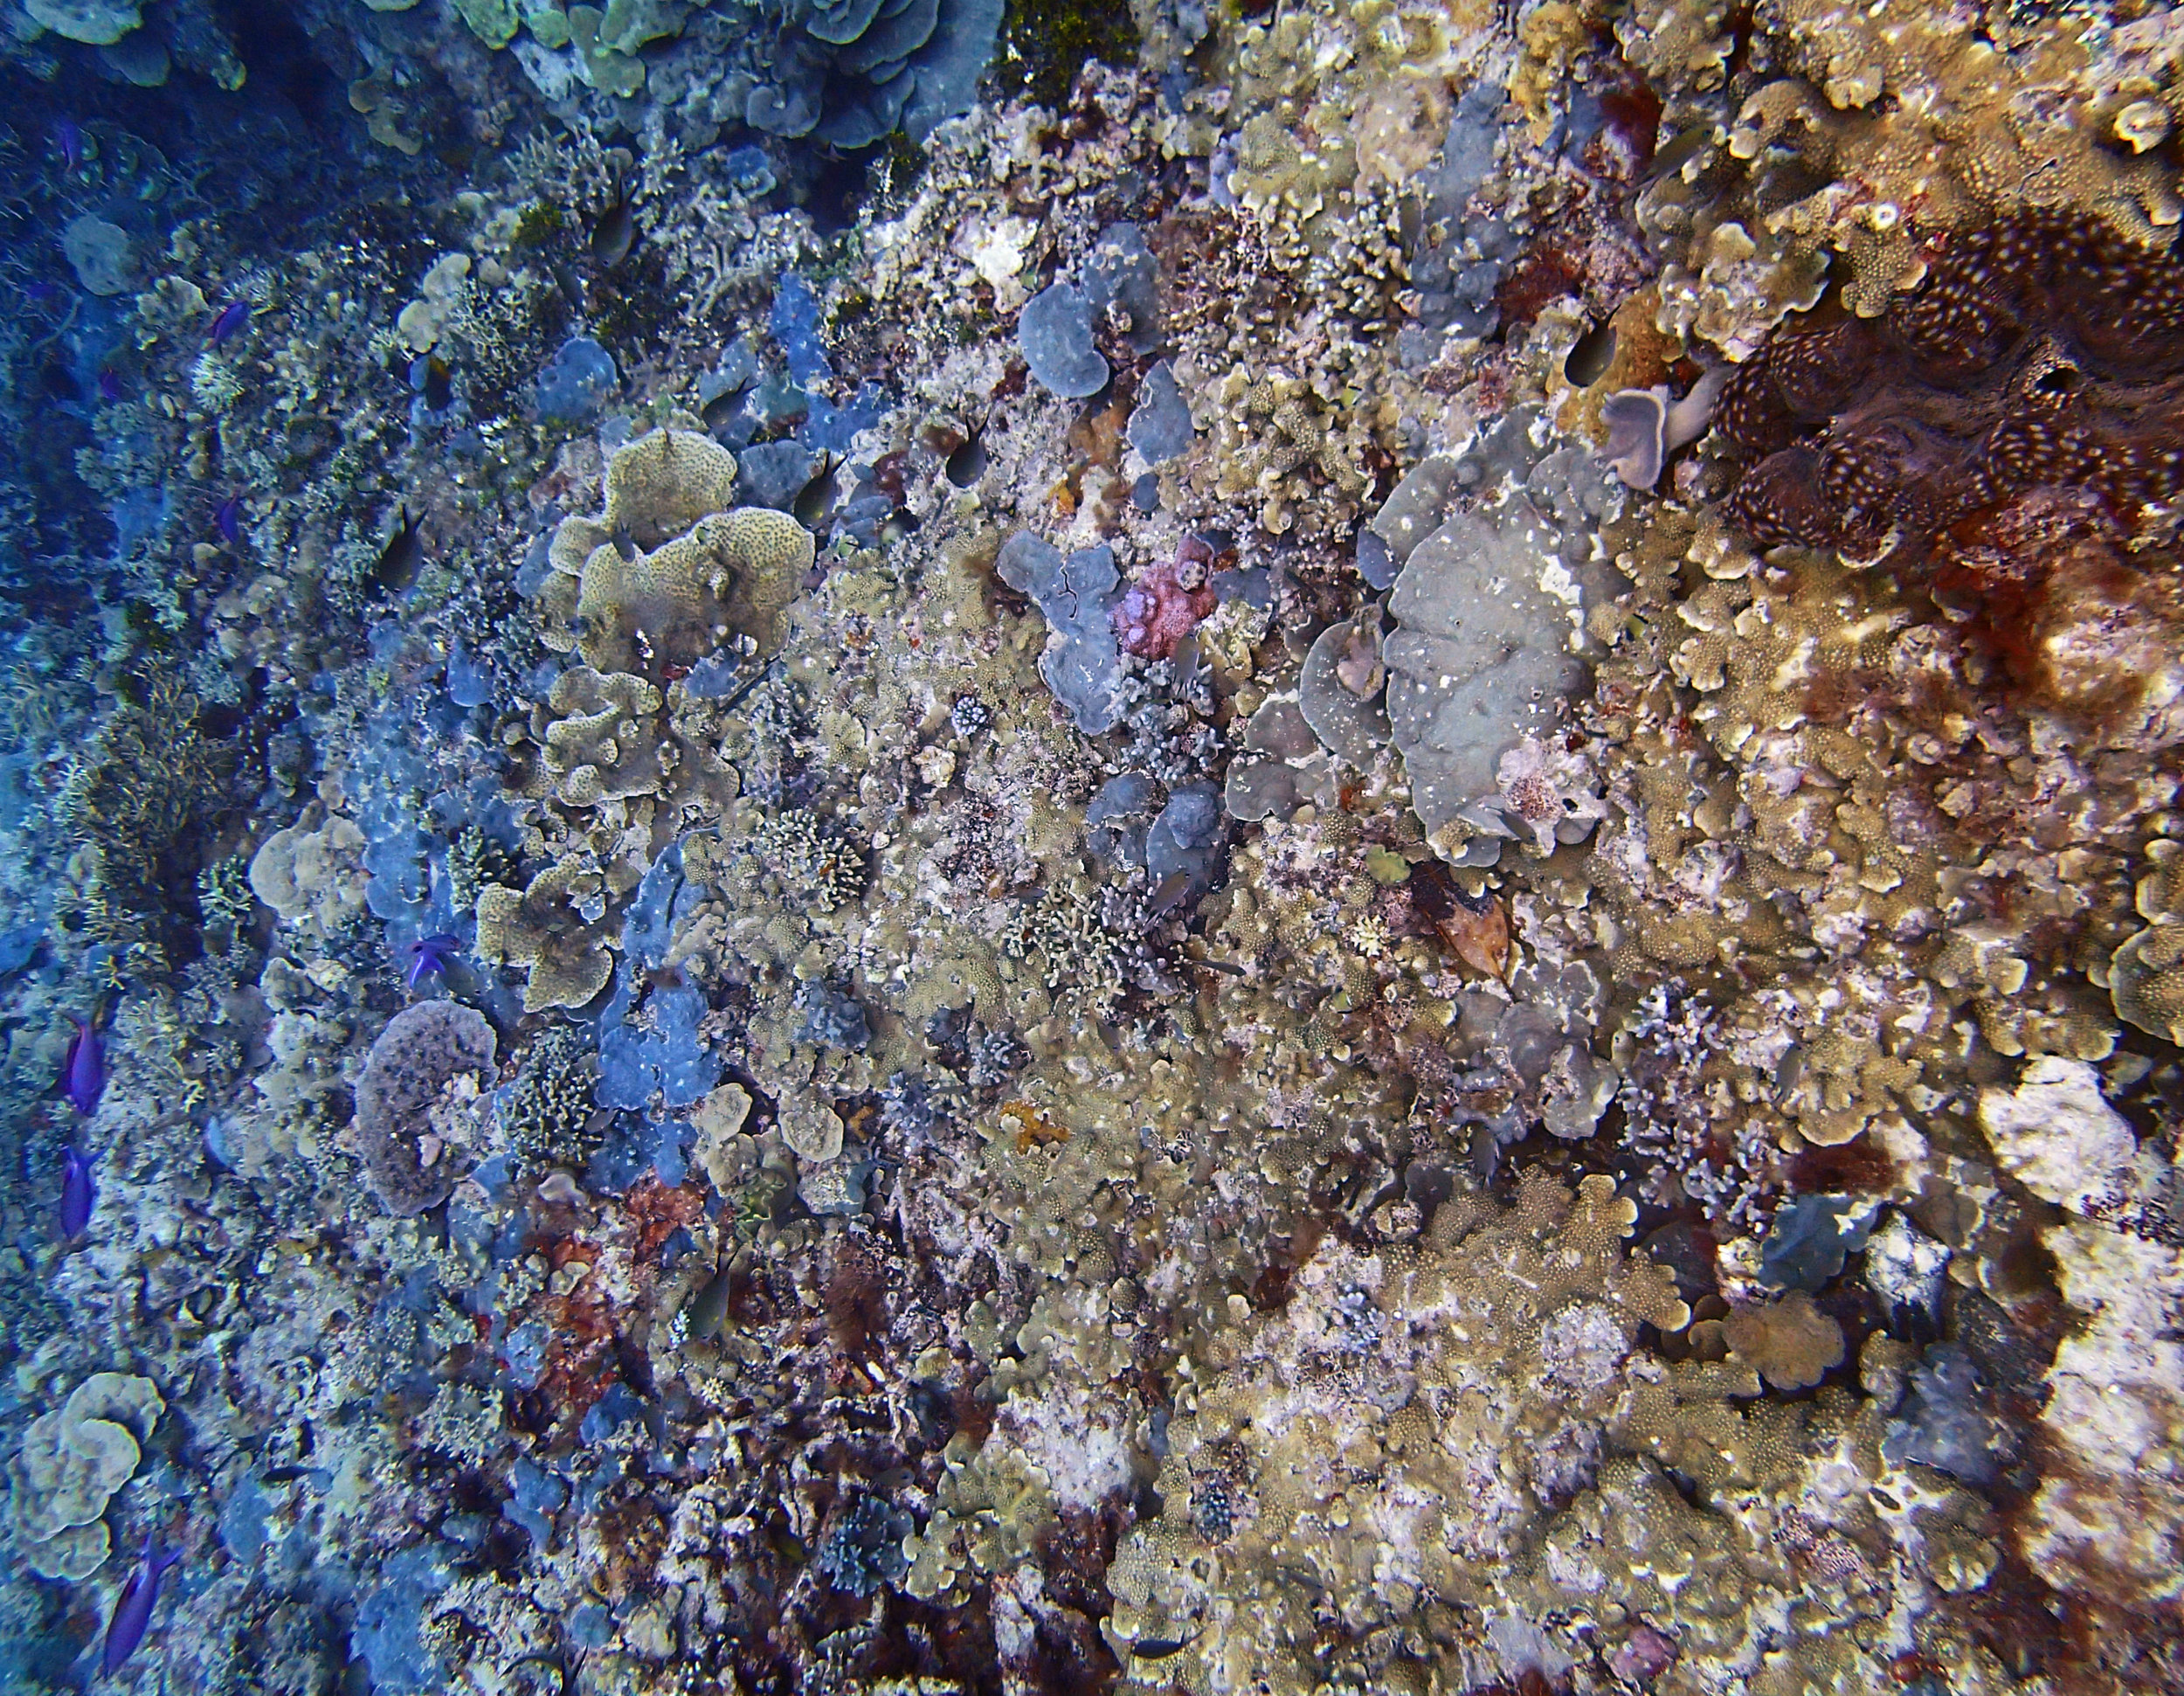 Reef Islands day 1 11-17-14.jpg